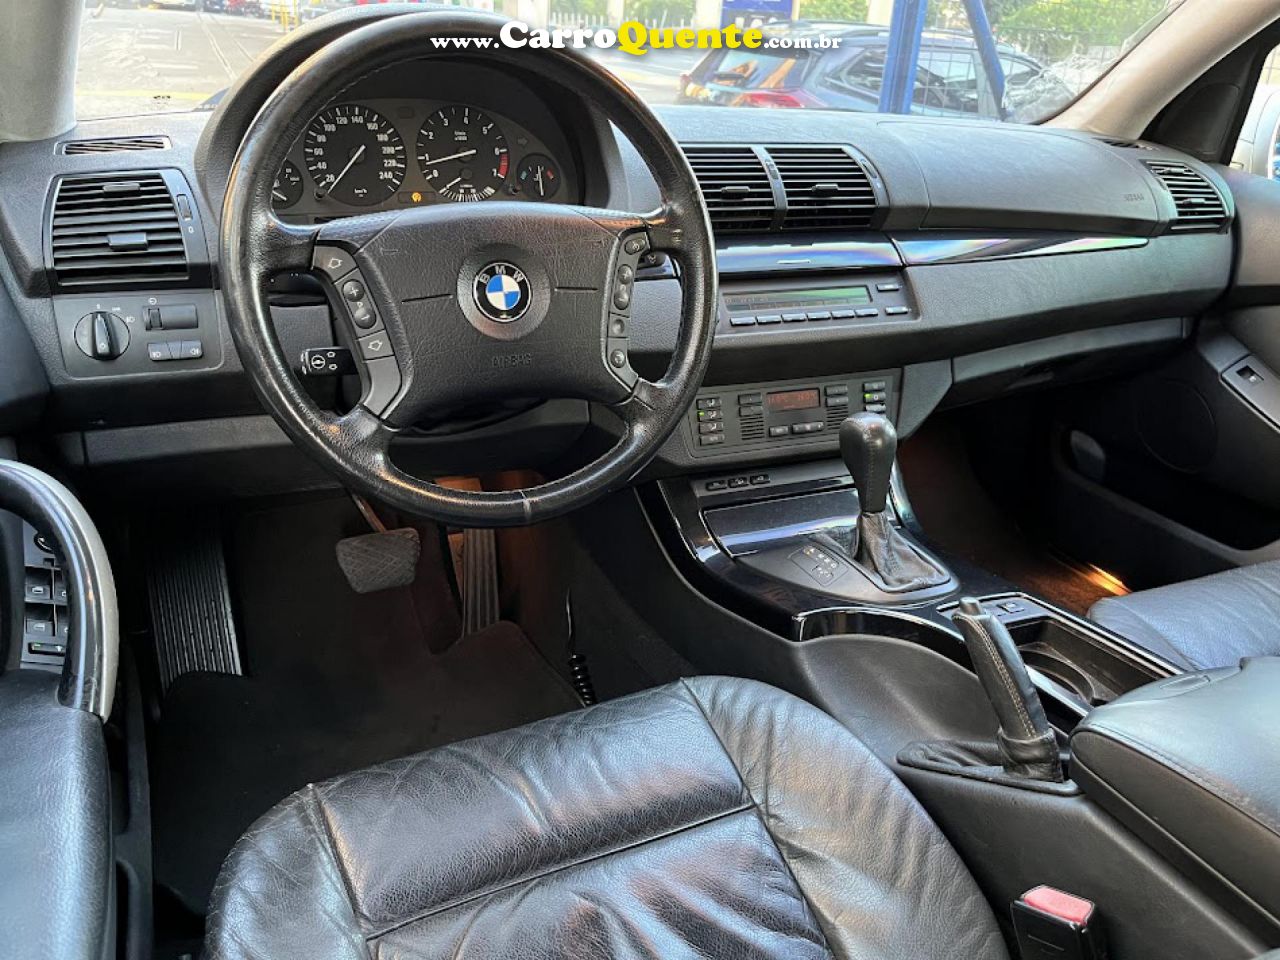 BMW   X5 3.0 4X4   PRATA 2001 3.0 GASOLINA - Loja